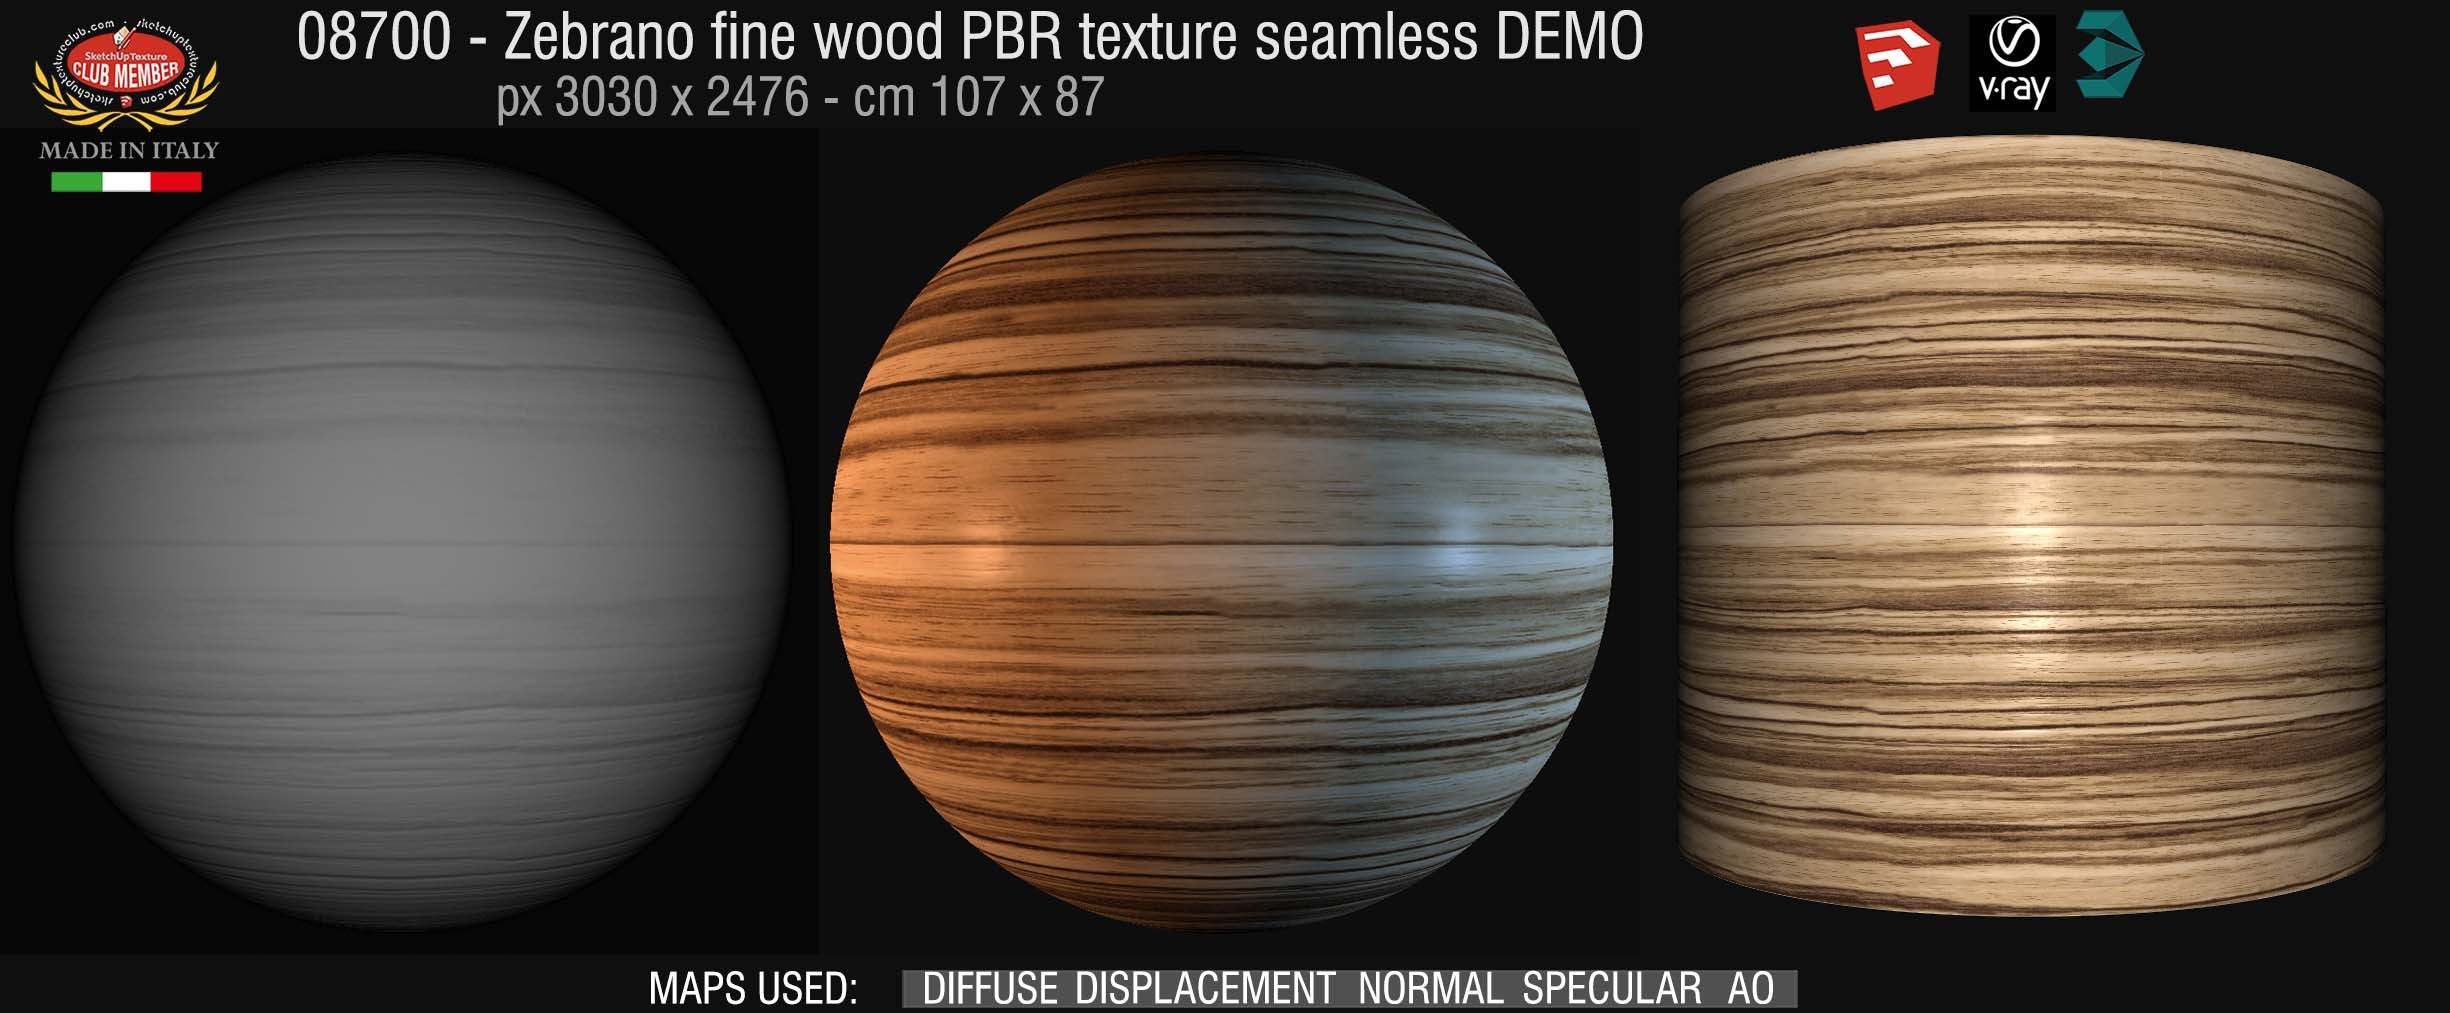 08700 zebrano fine wood PBR texture seamless DEMO